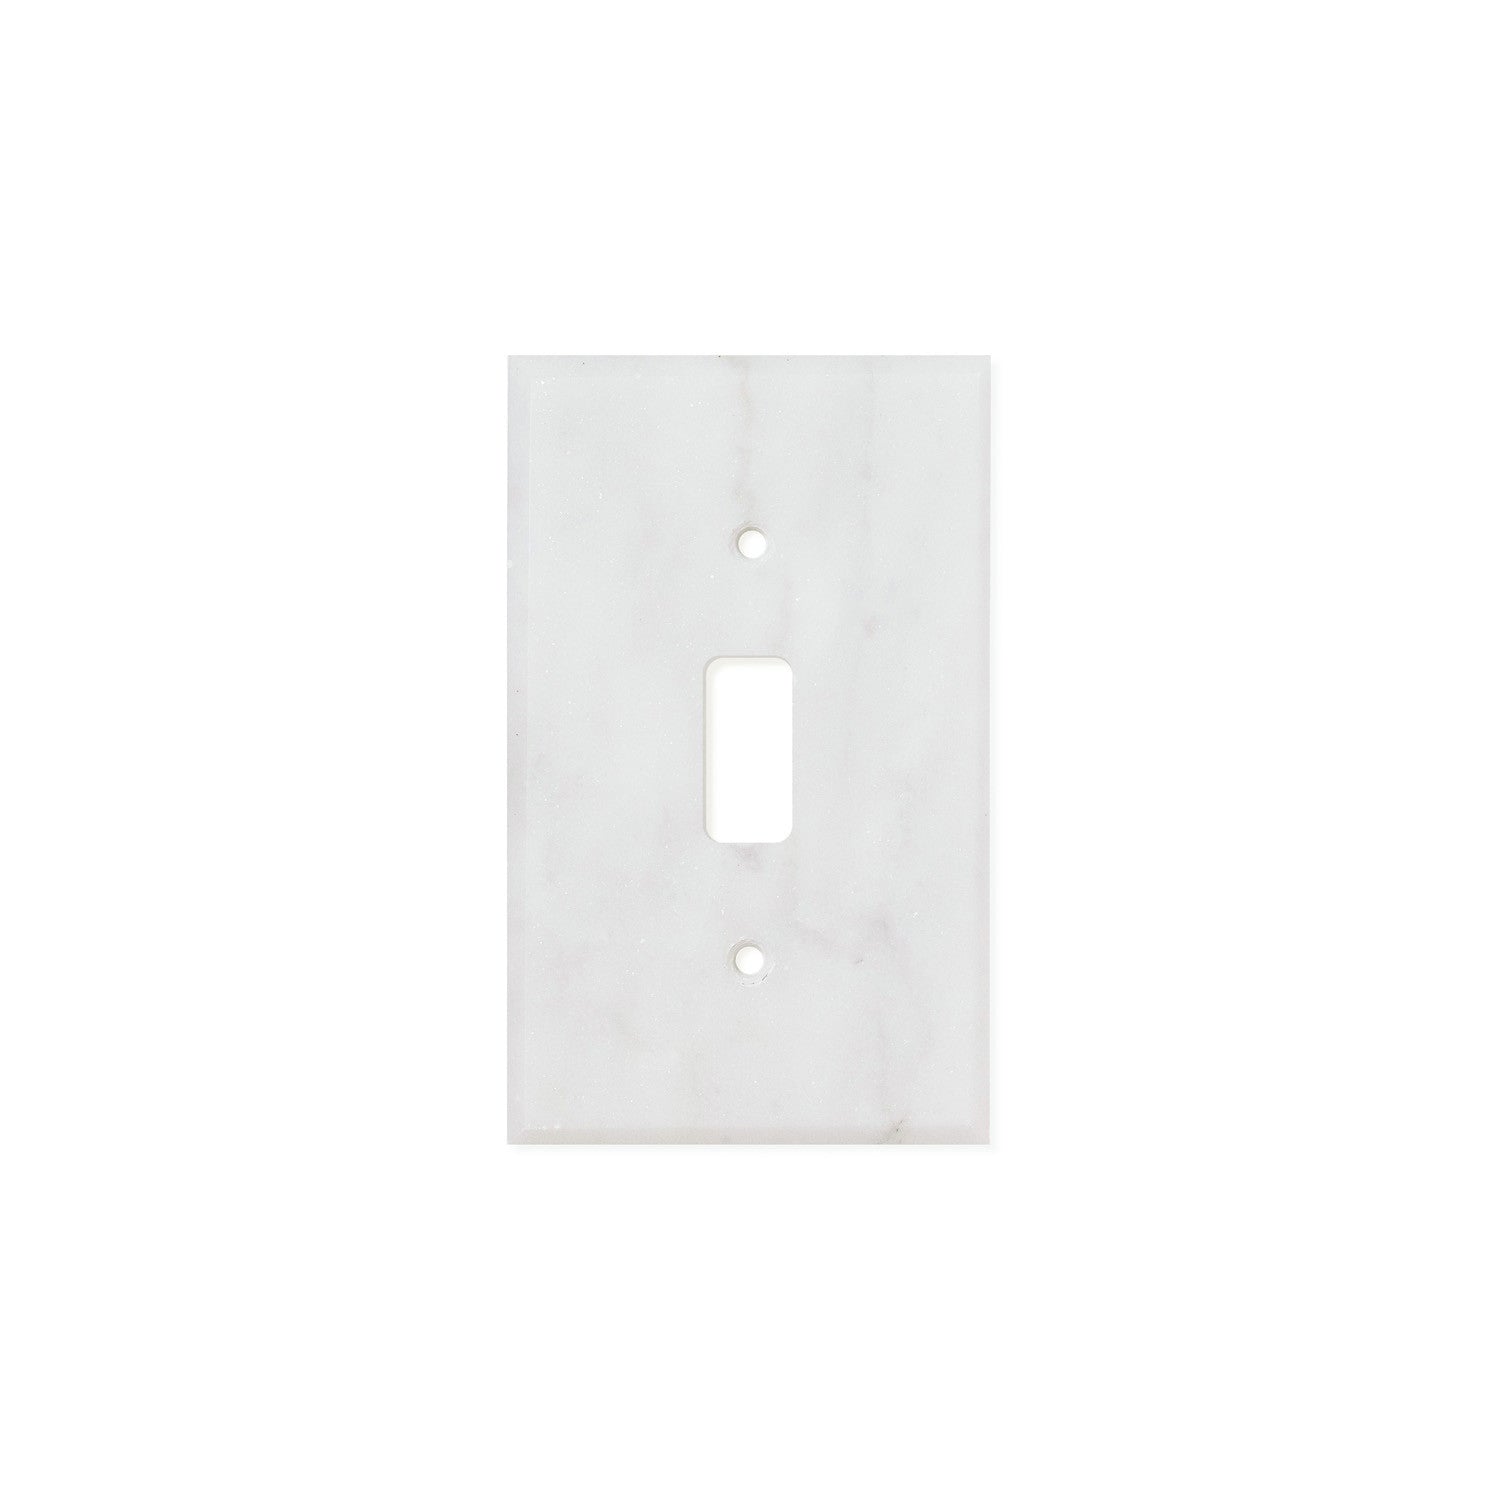 Bianco Carrara (Carrara White) Marble Switch Plate Cover, Polished (SINGLE TOGGLE) - Tilephile